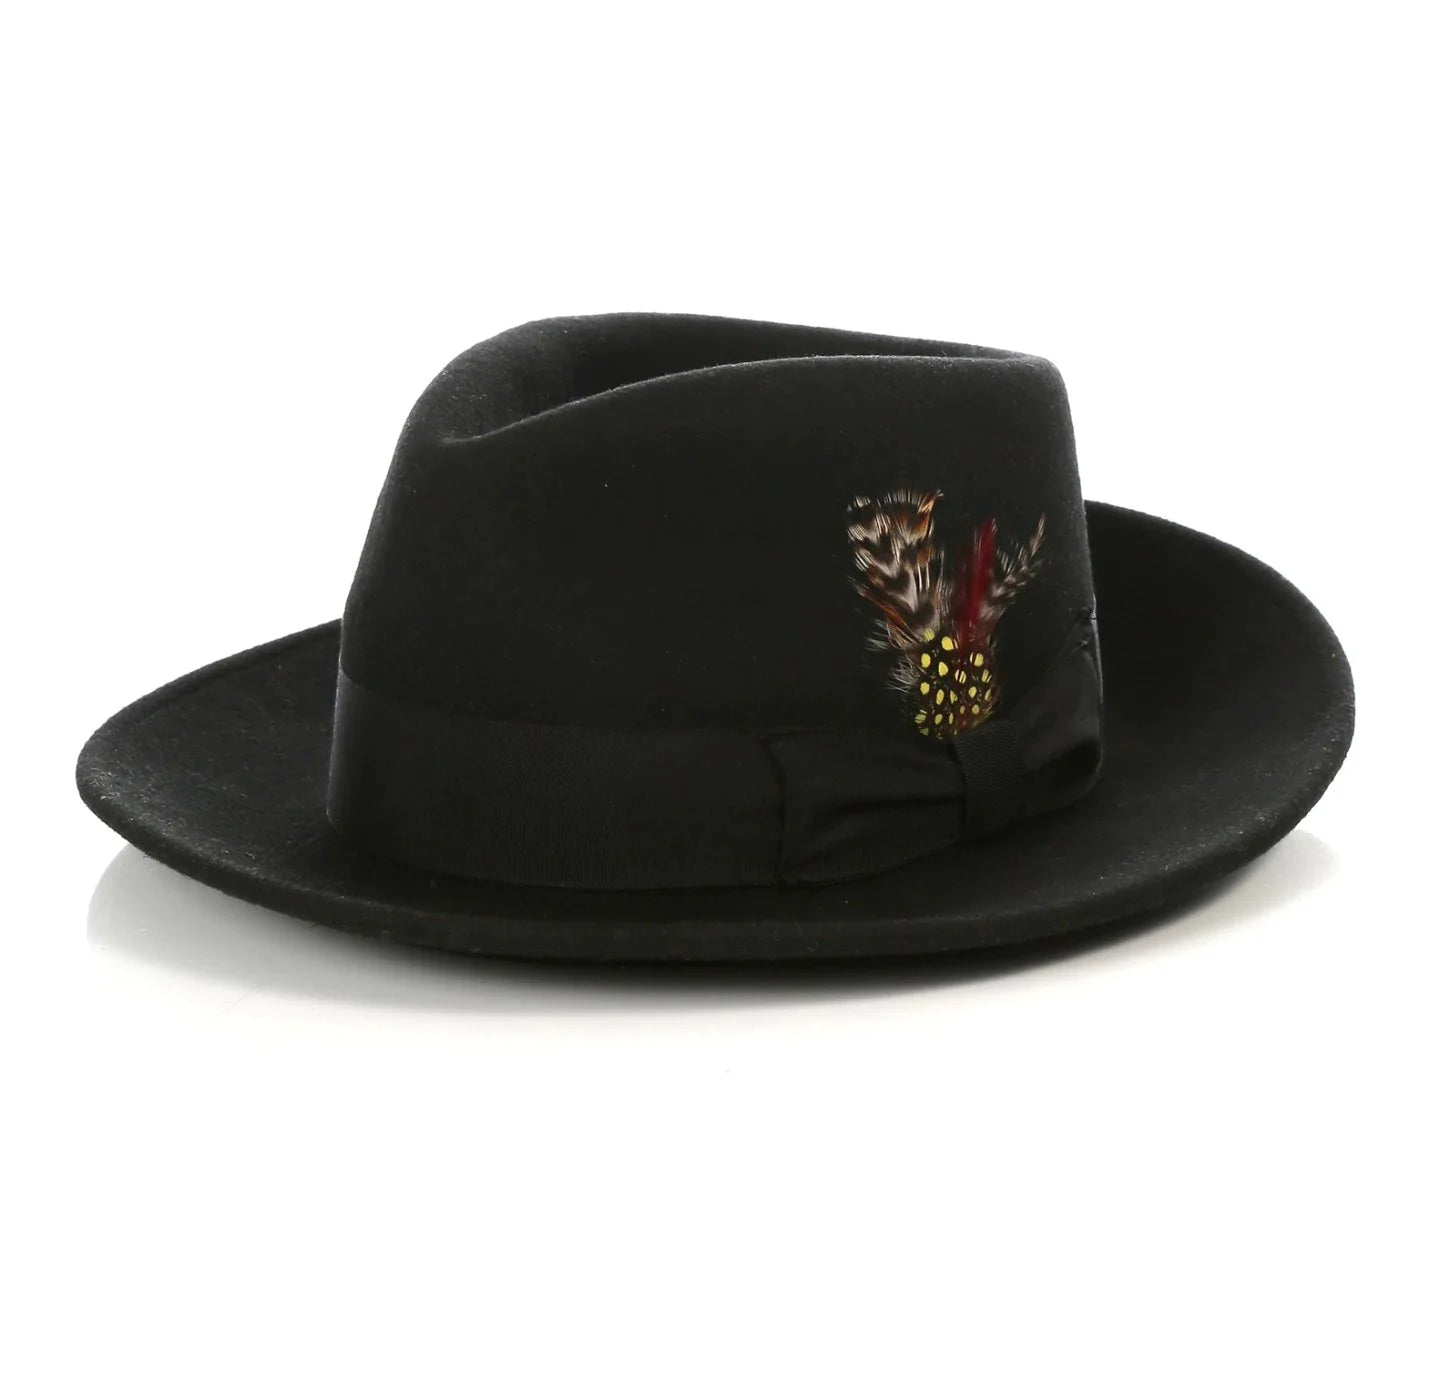 Men’s black untouchable fedora hat